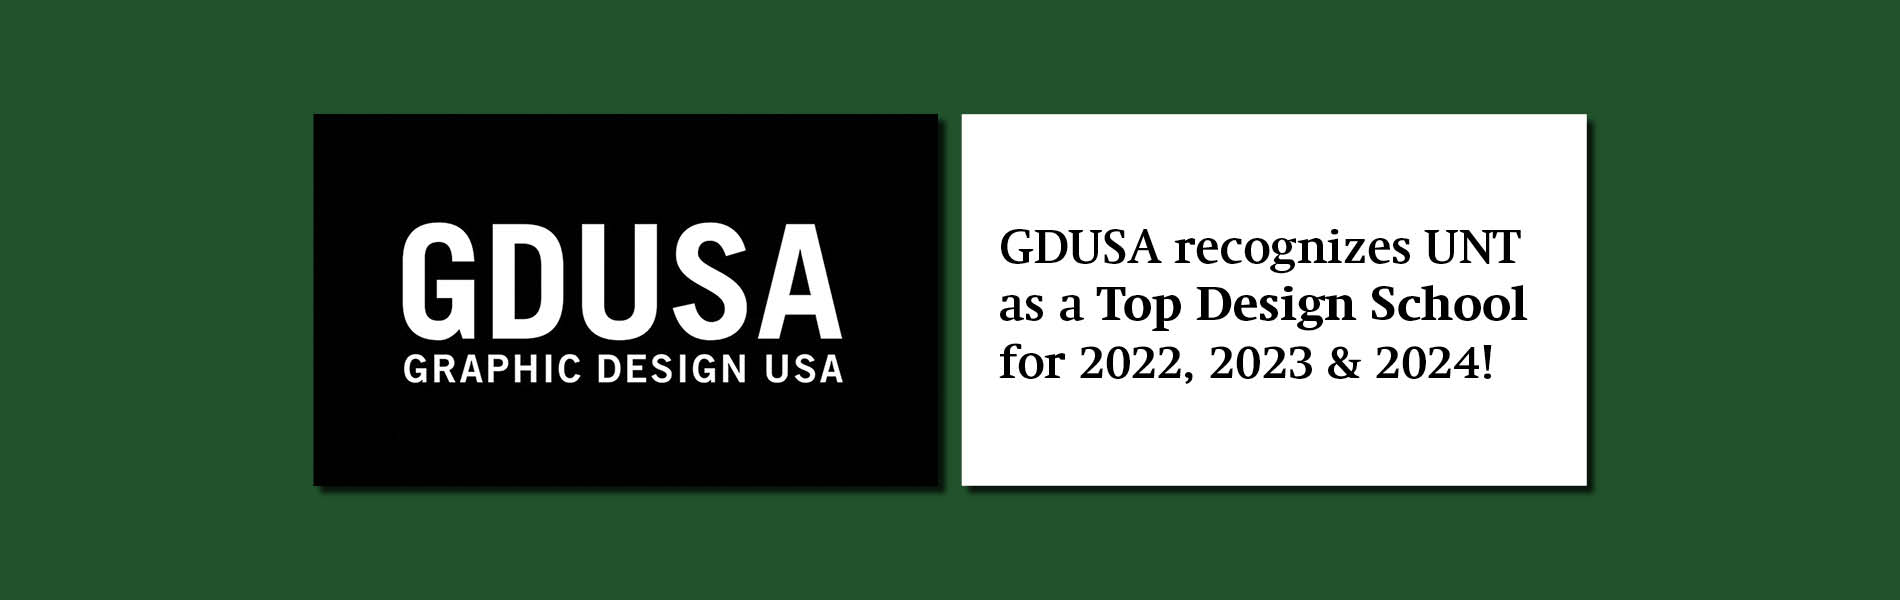 GDUSA recognizes UNT CVAD as a Top Design School!